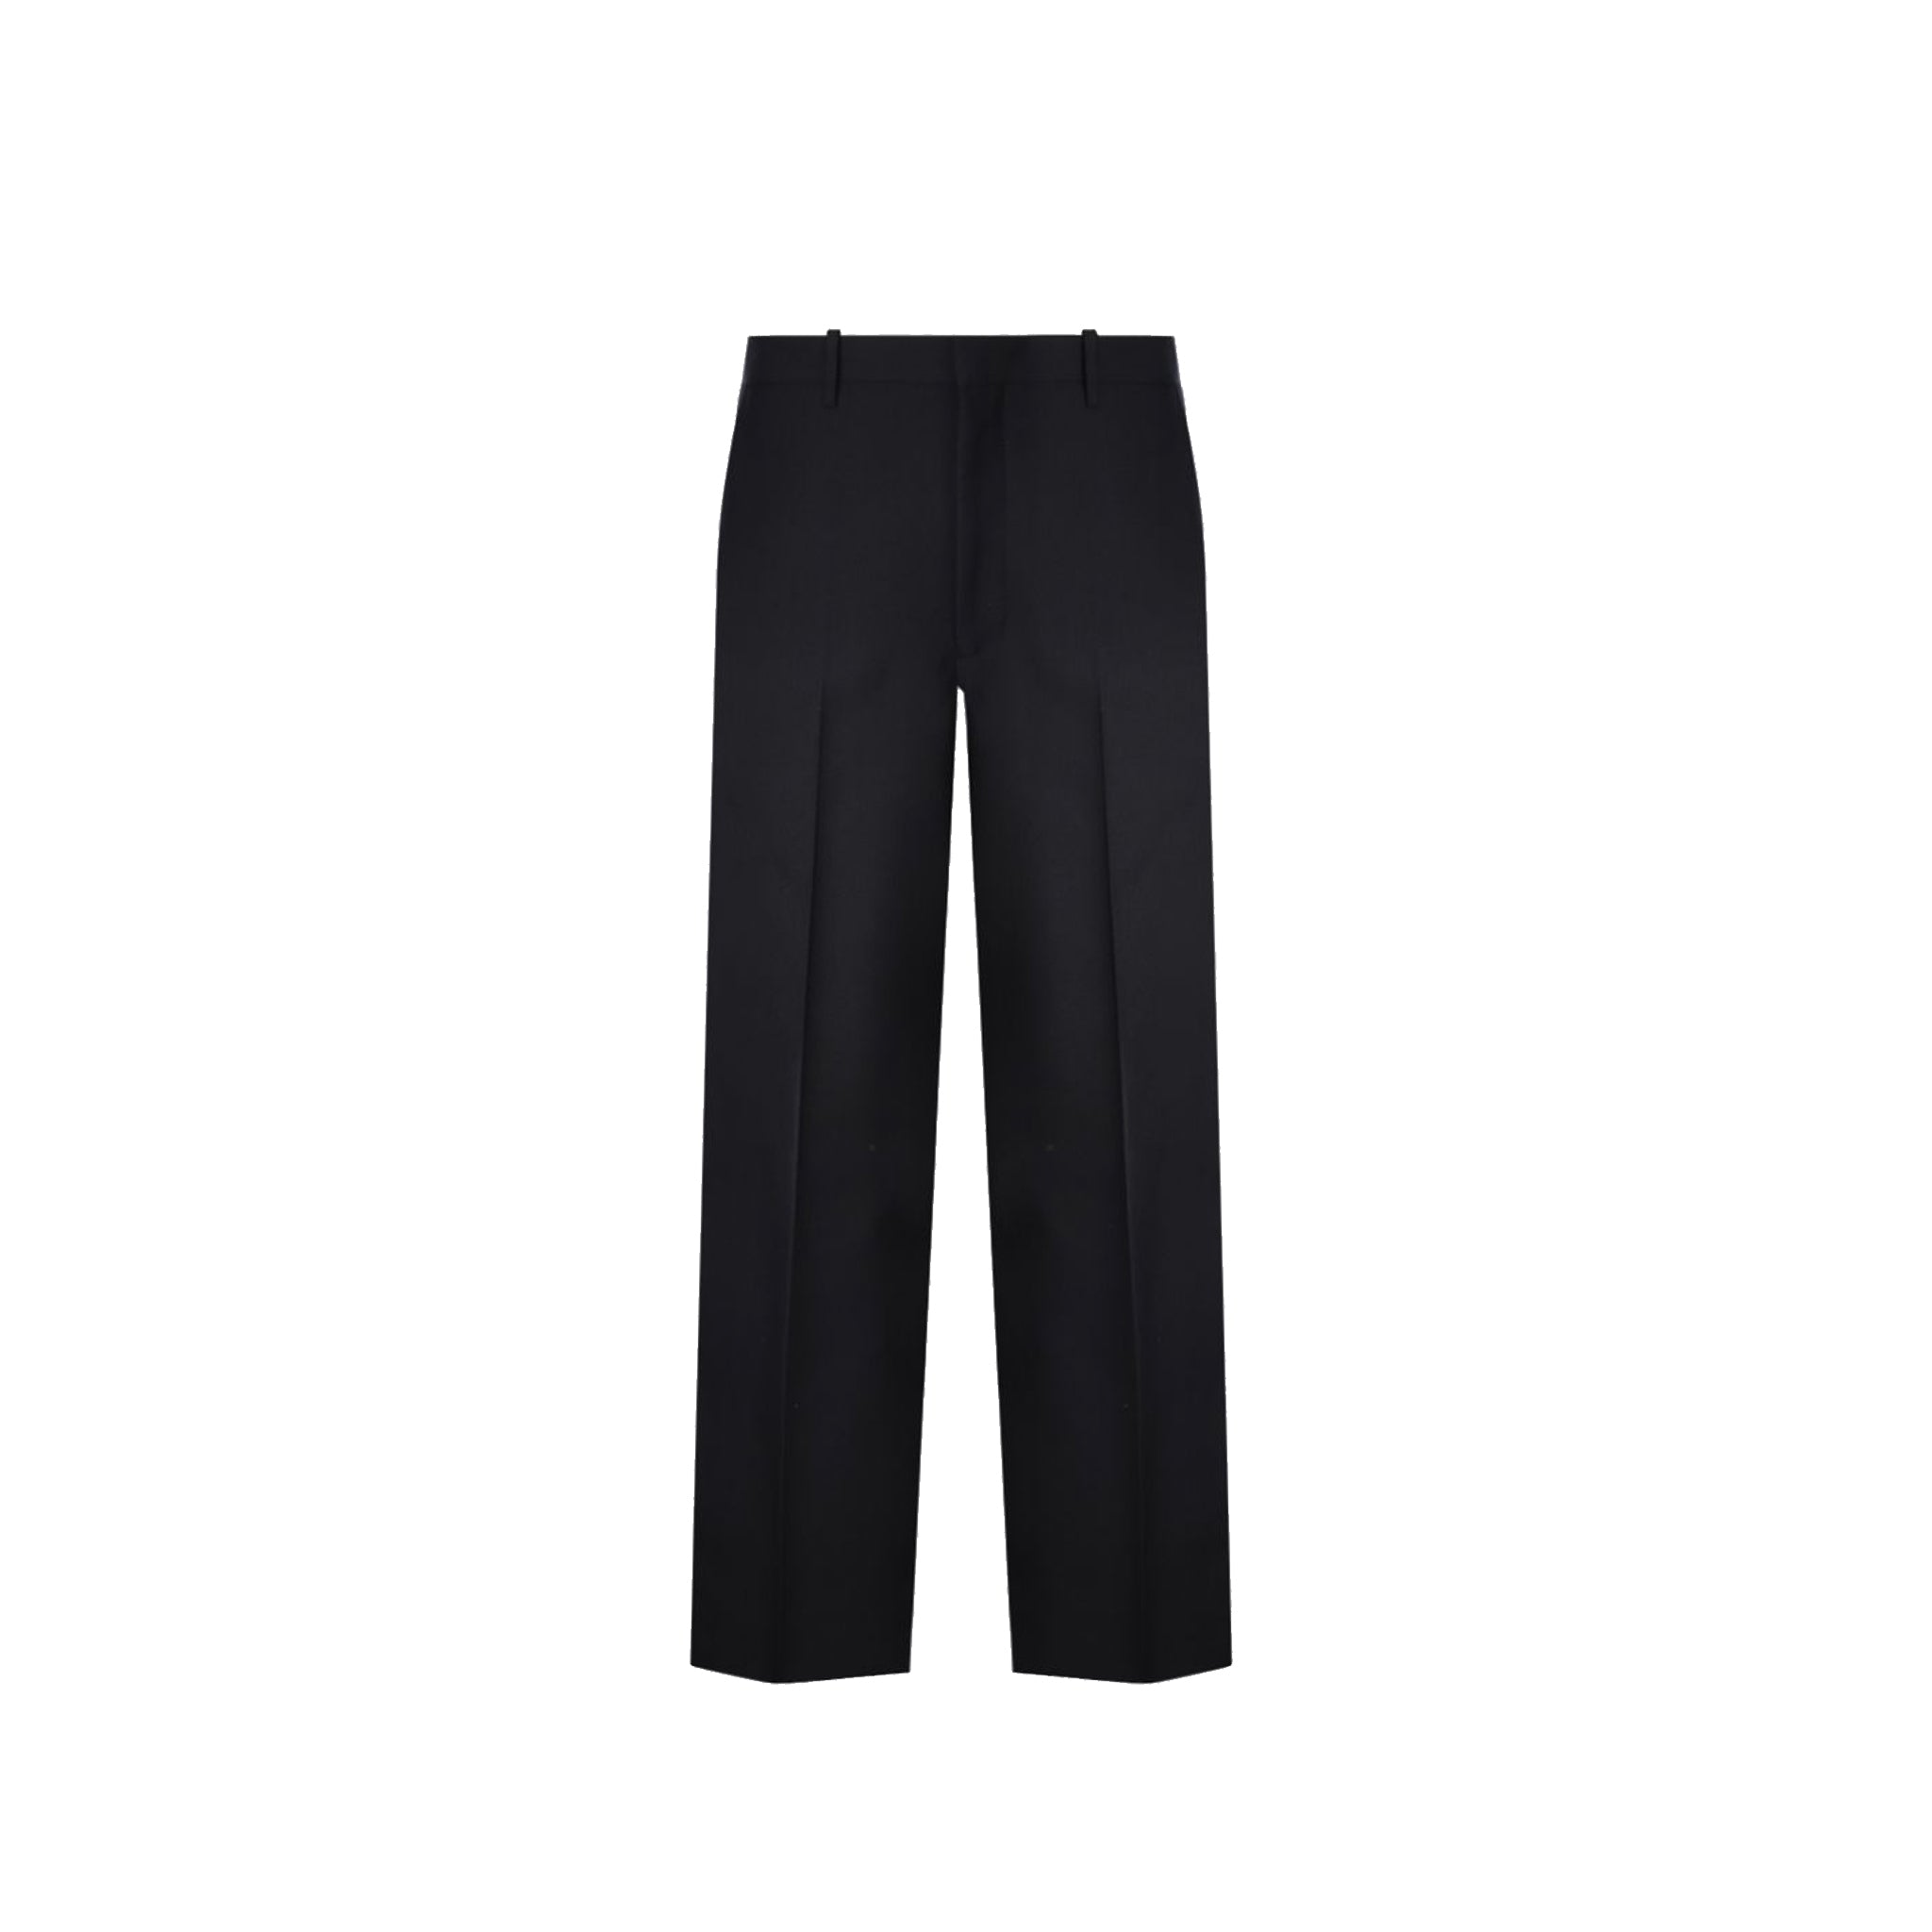 PRADA-Outlet-Sale-Prada Wool Pants-MEN CLOTHING-ARCHIVIST